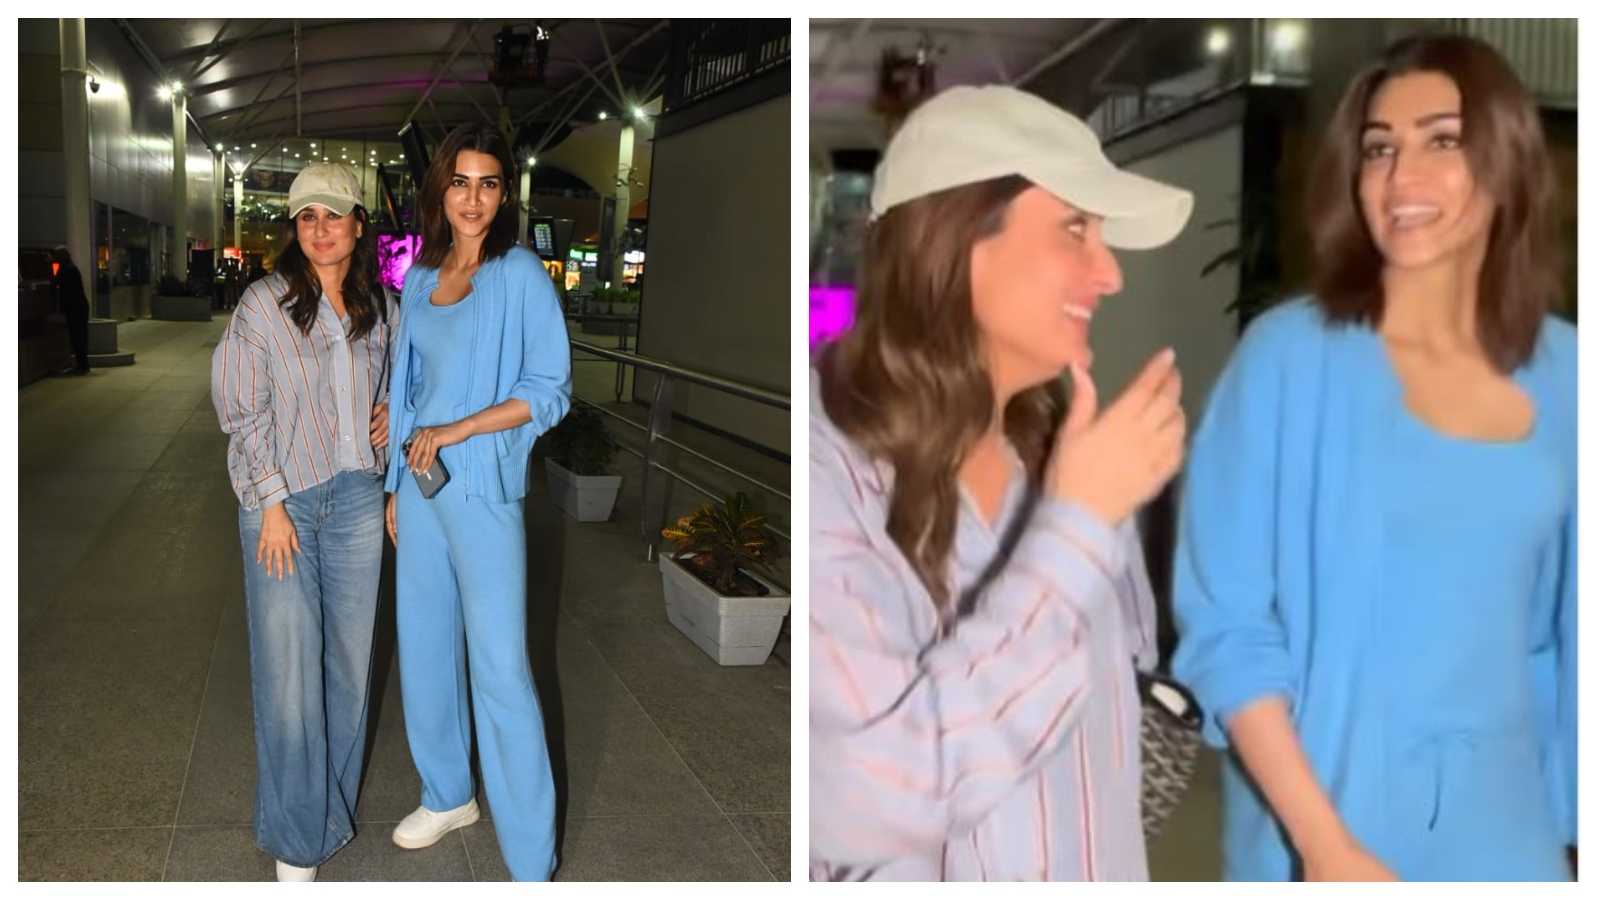 'Fake love fake jhappi': The Crew stars Kareena Kapoor Khan and Kriti Sanon happily interact at airport, get trolled